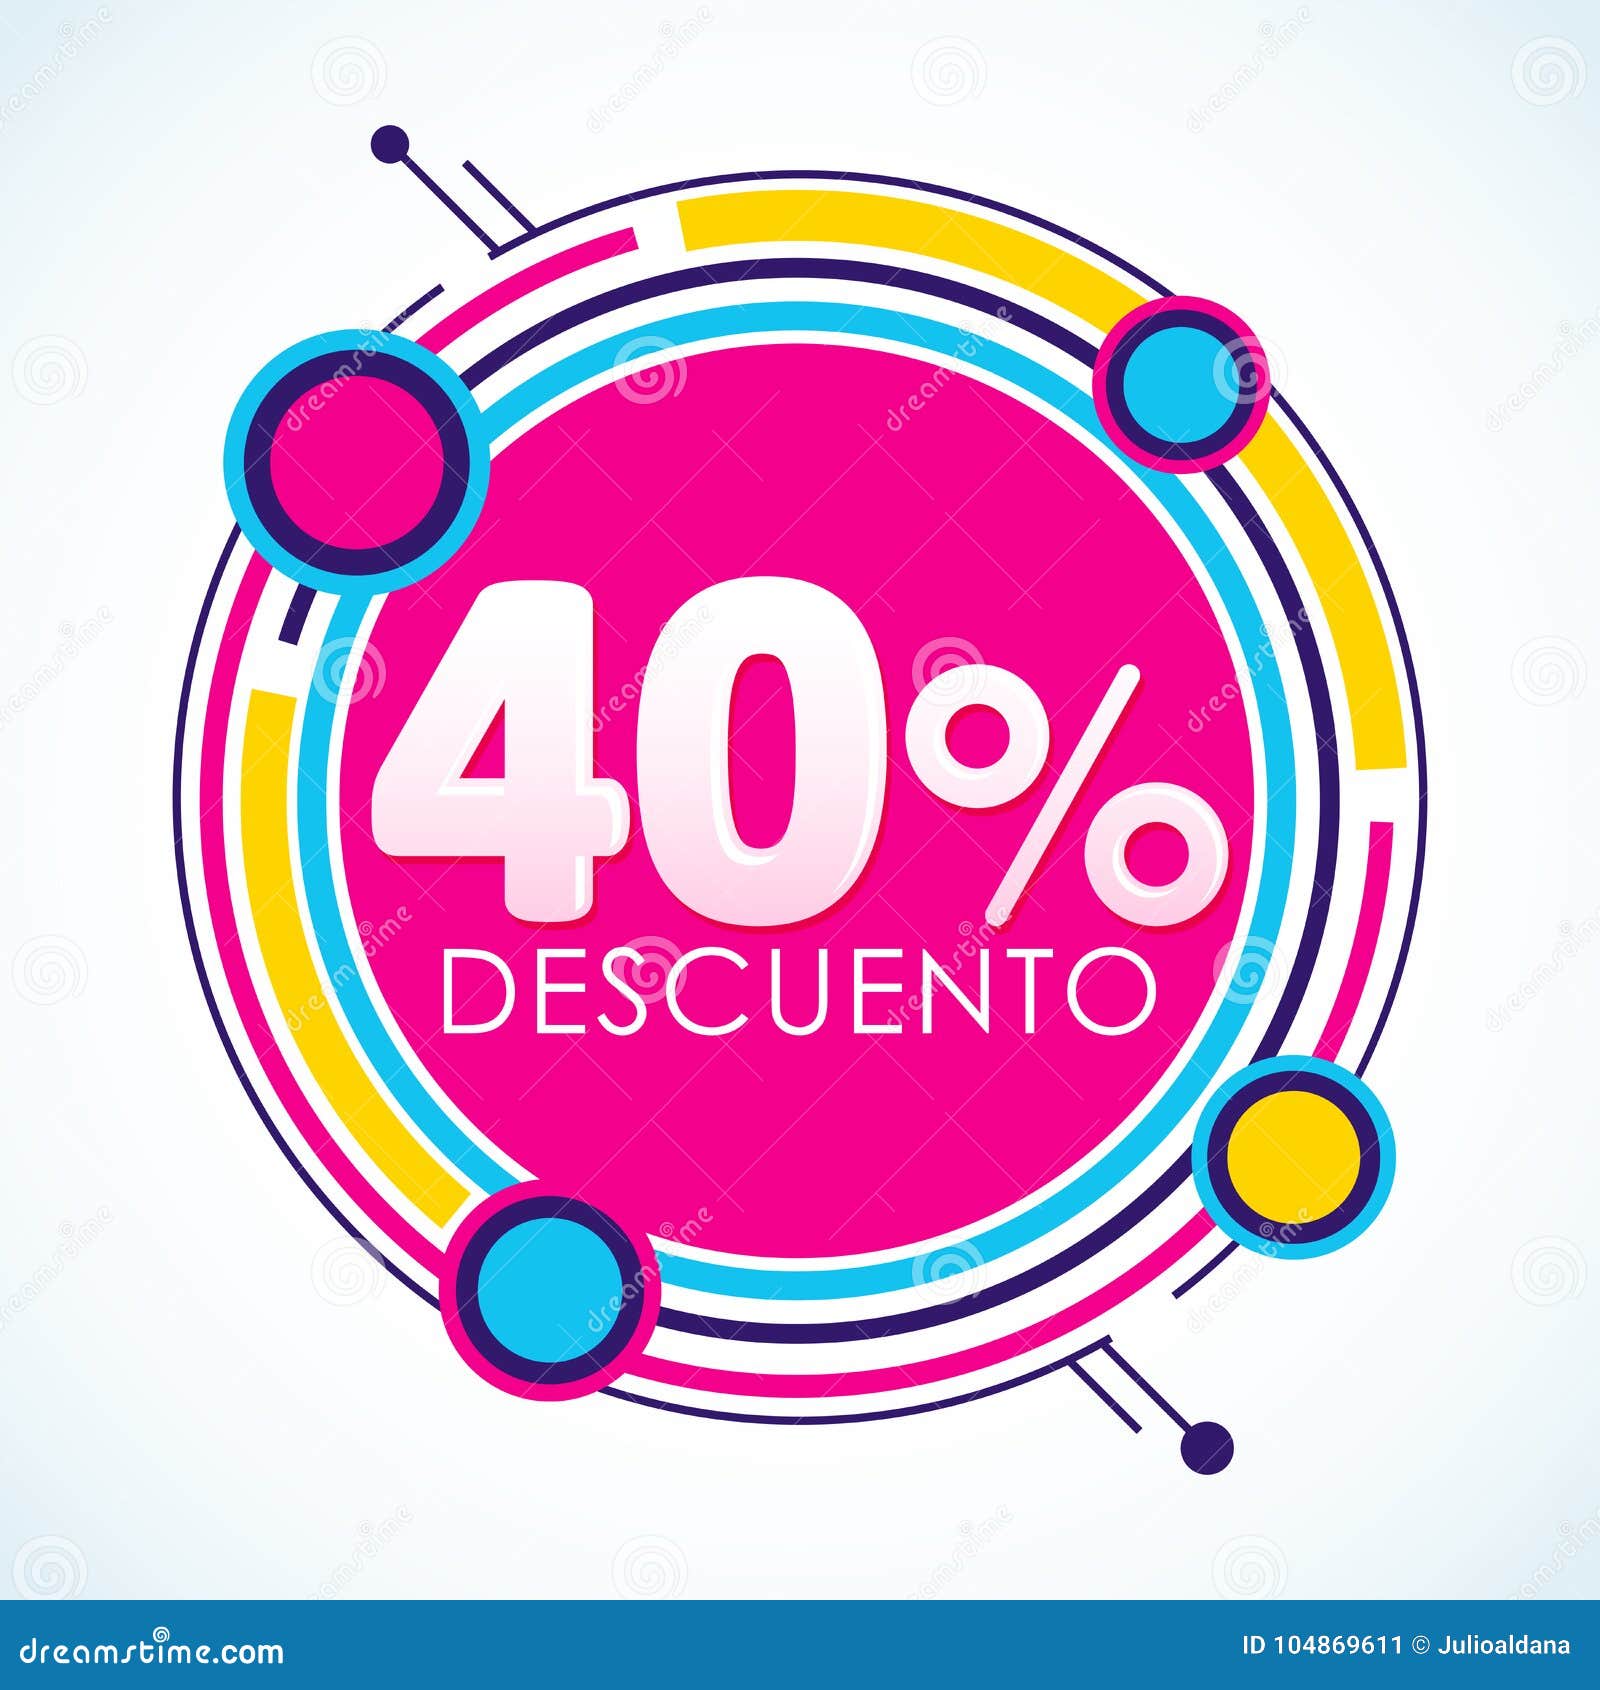 40% descuento, 50% discount sticker spanish text, sale tag